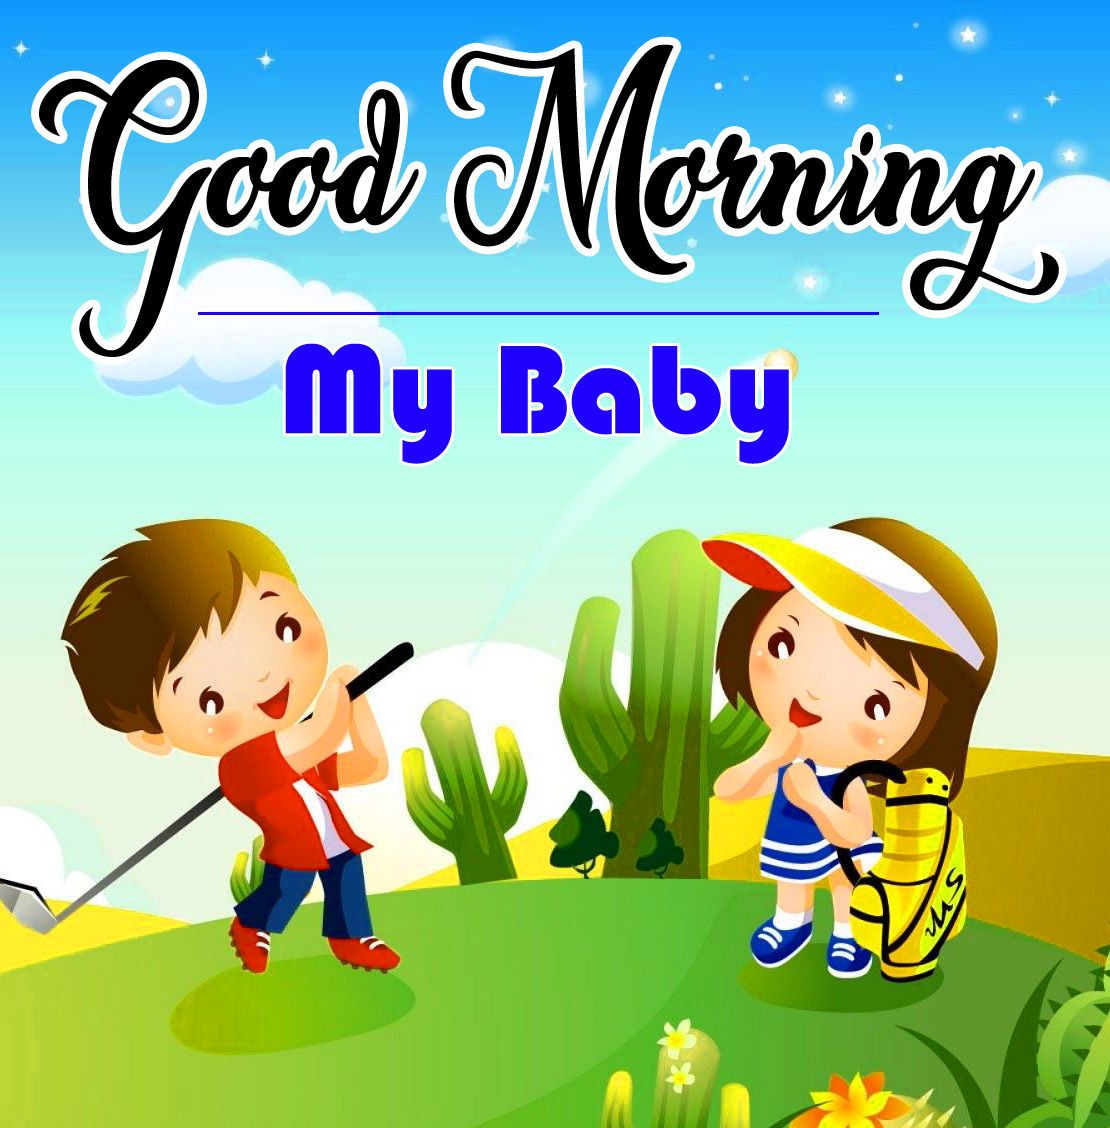 Cartoon Good Morning Image Picture Photo Download Morning Image. Good Morning Photo HD Downlaod. Good Morning Pics Wallpaper HD